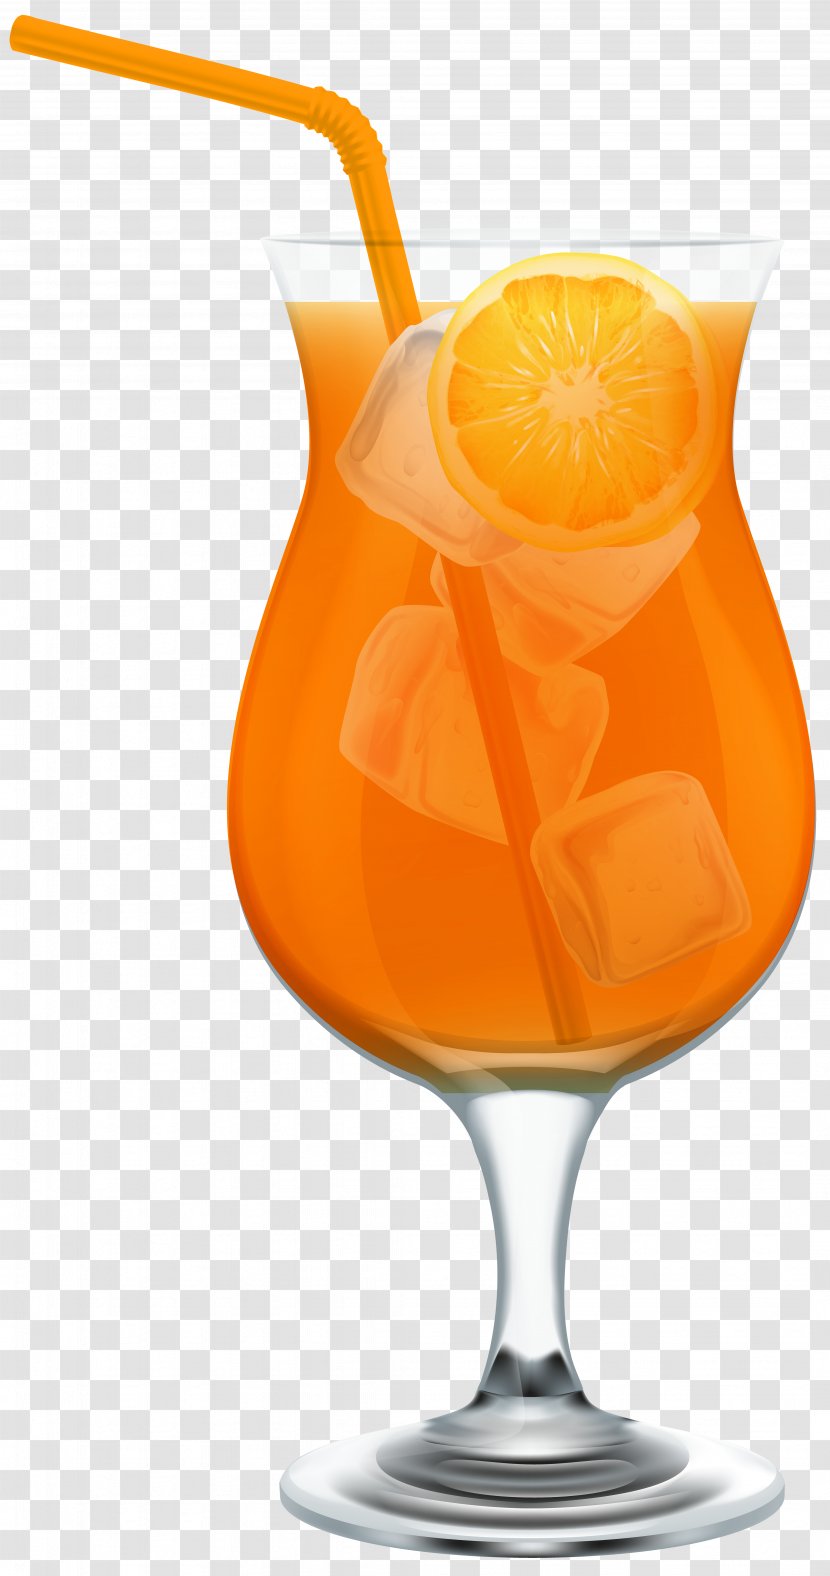 Orange Juice Cocktail Martini Drink - Garnish Transparent PNG